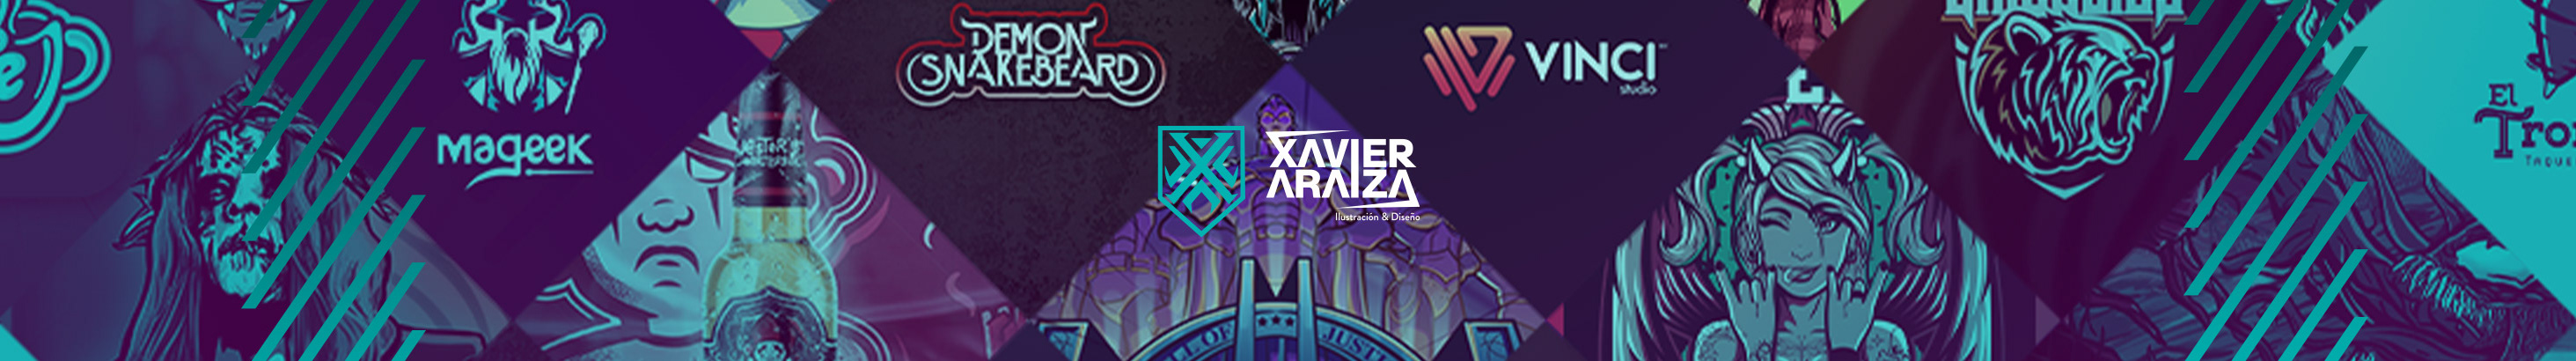 Xavier Araiza's profile banner